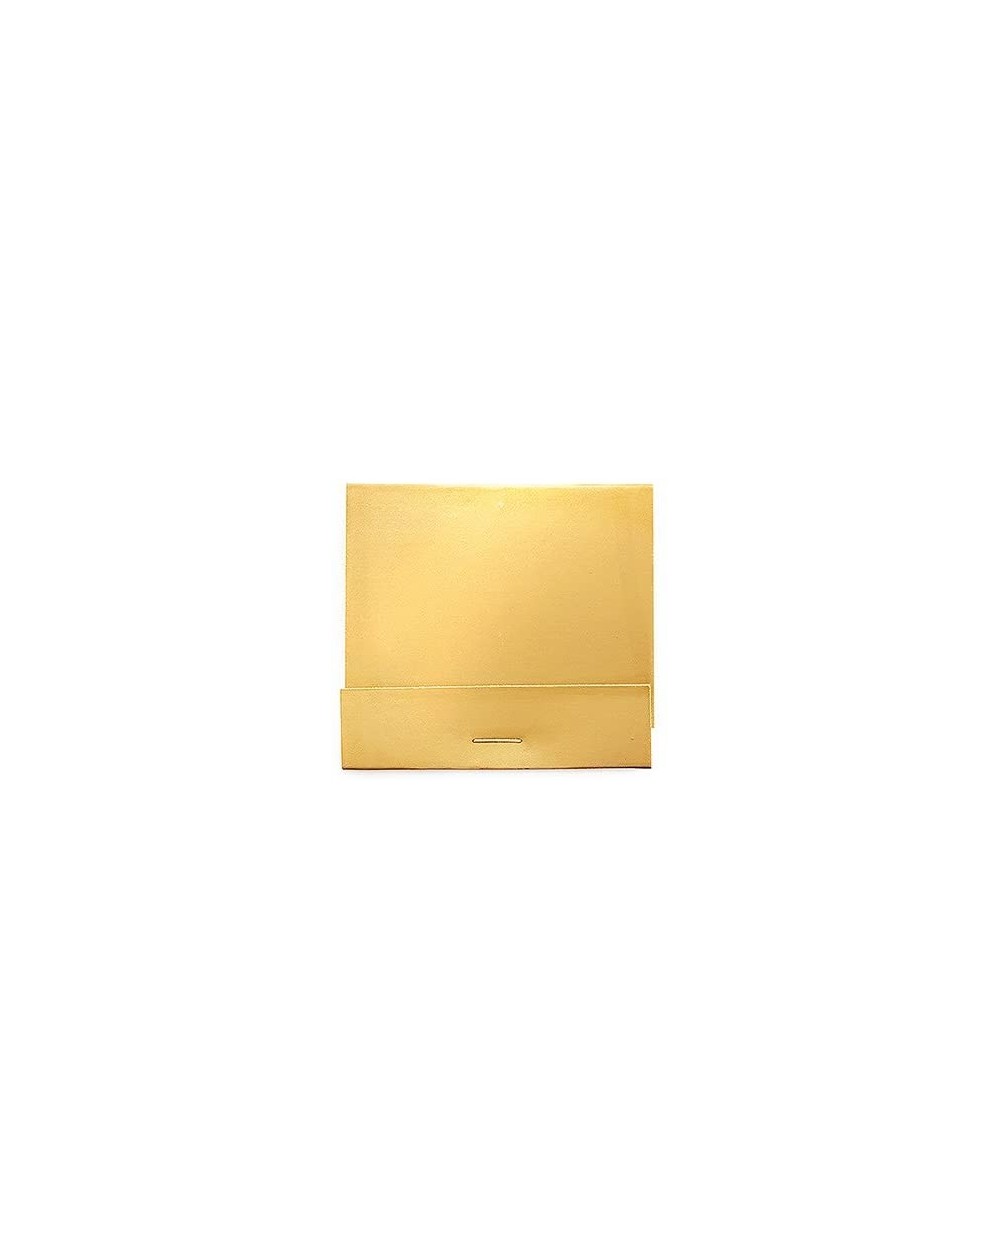 Favors Matchbook Gold - 50 Pack - Gold - CU112T39K59 $30.41